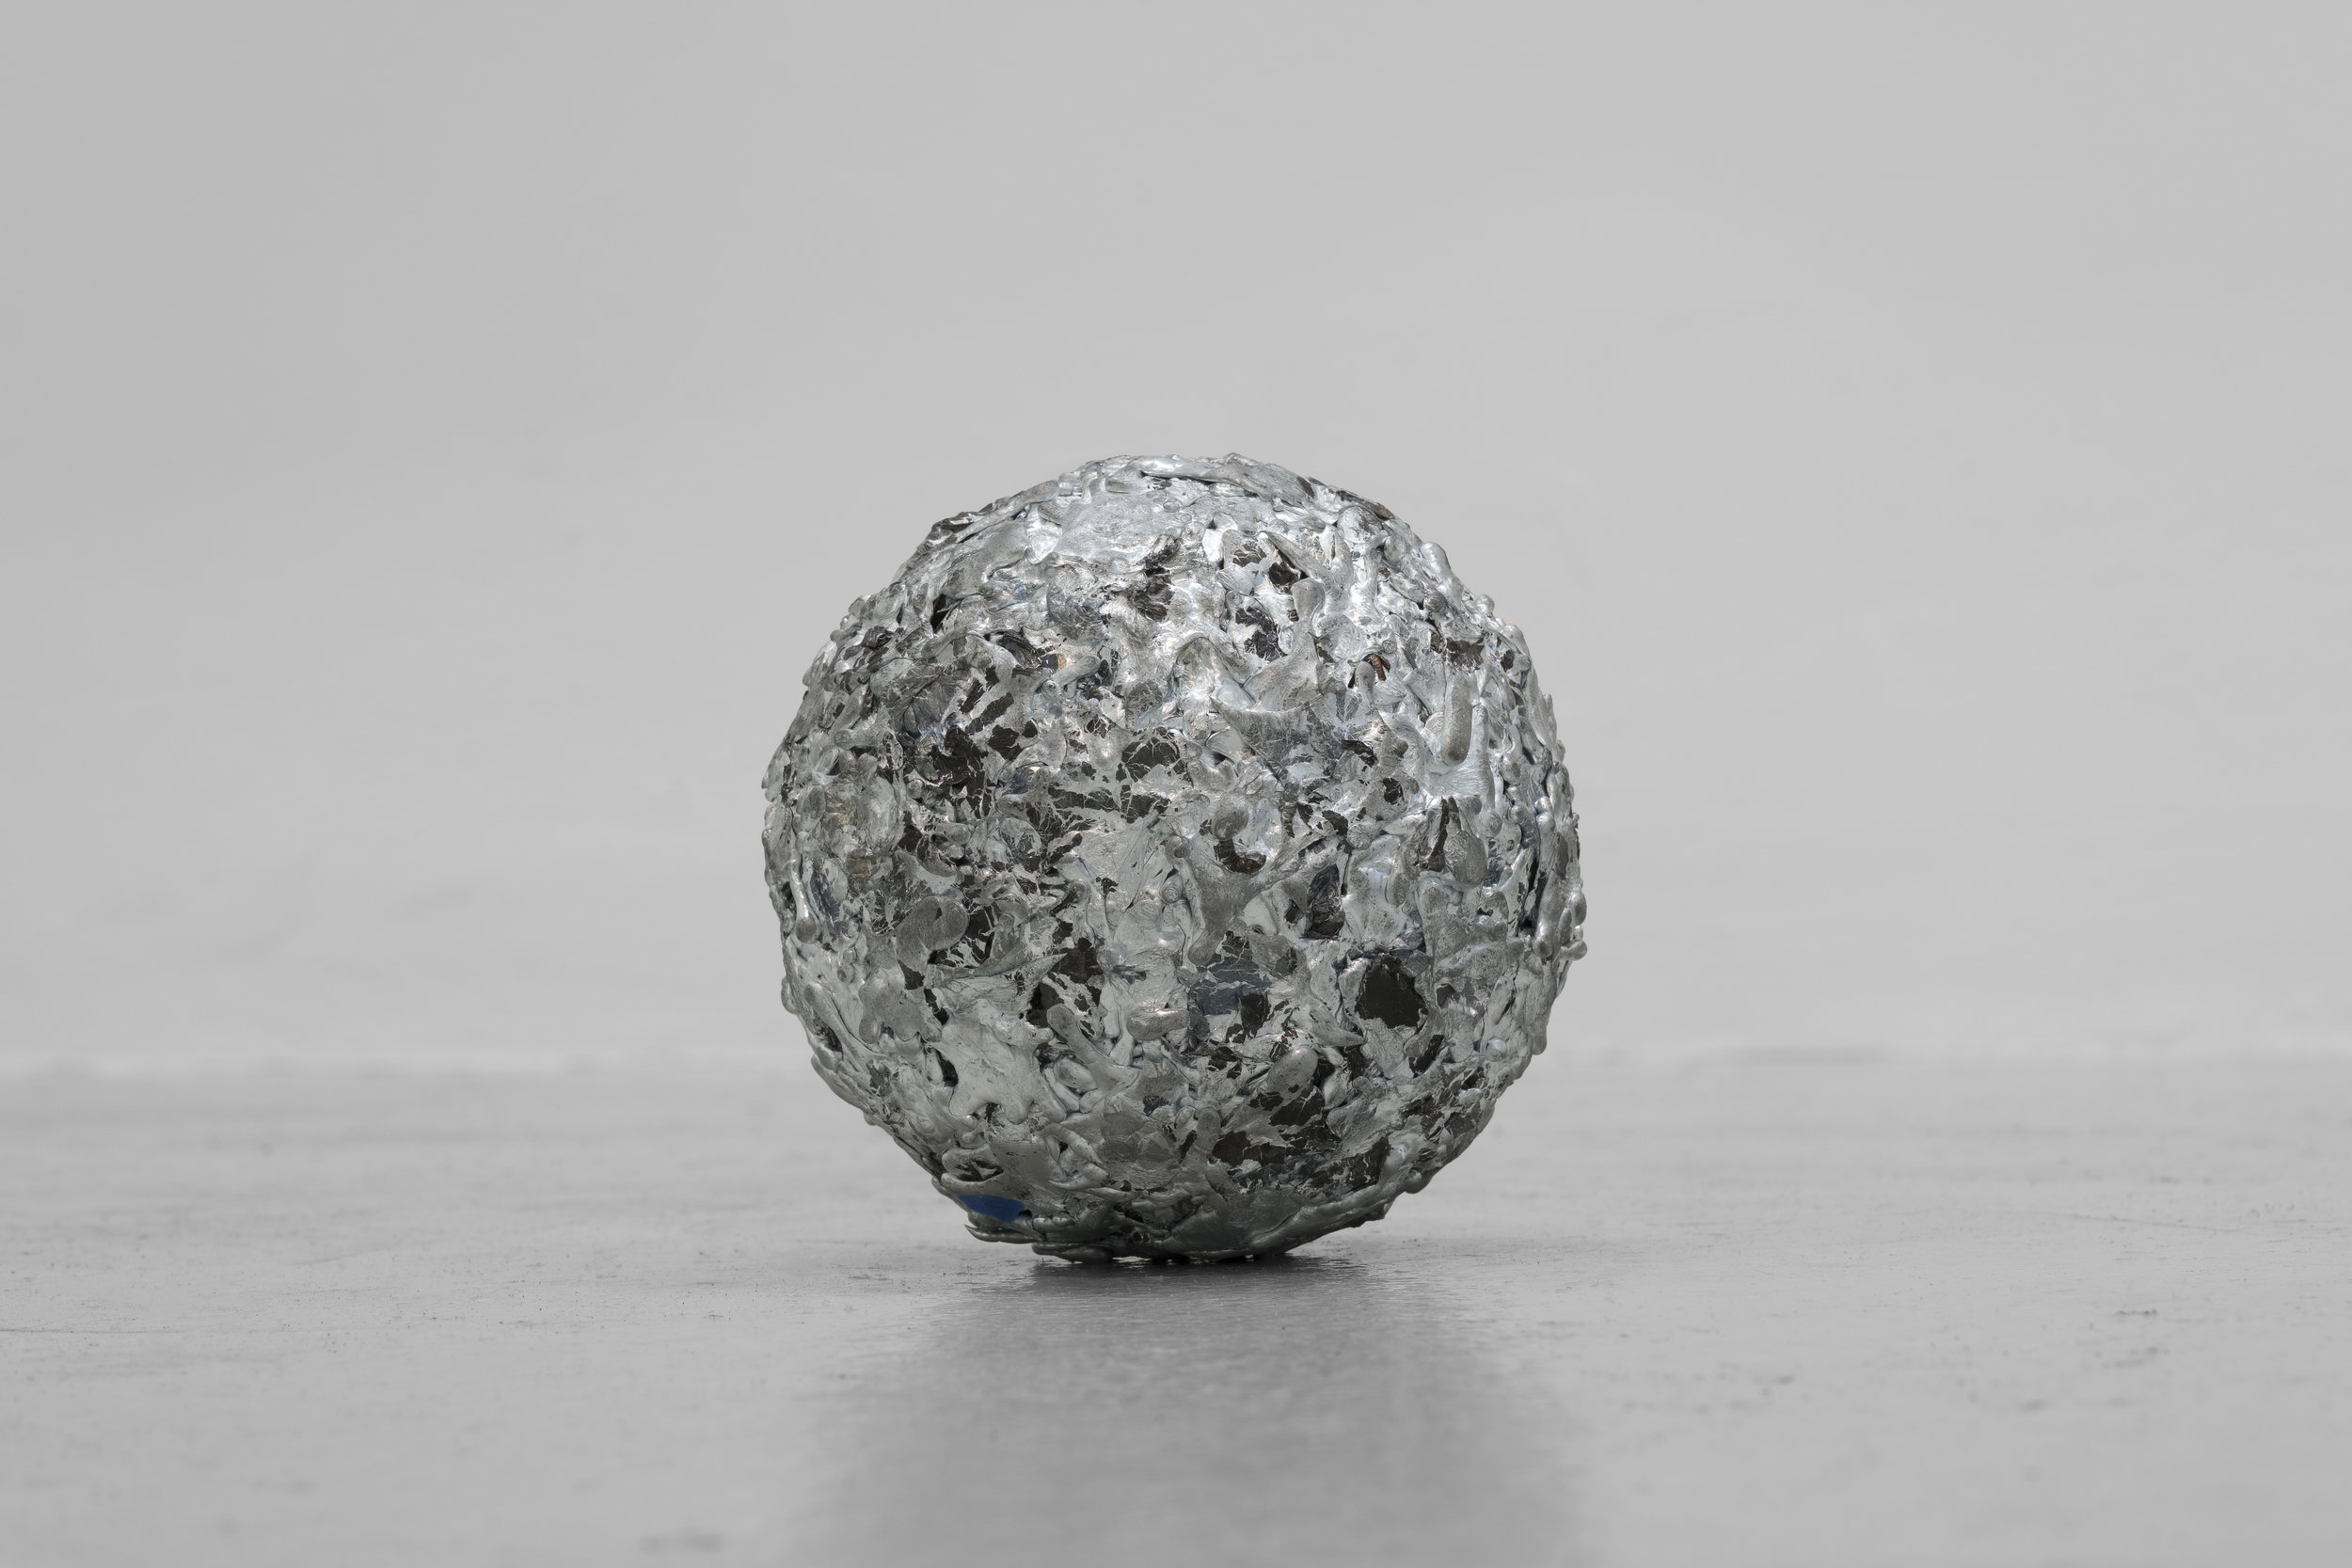  Matt Browning,  Untitled,  2018, Zinc, copper, 4 x 4 inches (10.16 x 10.16 cm) 